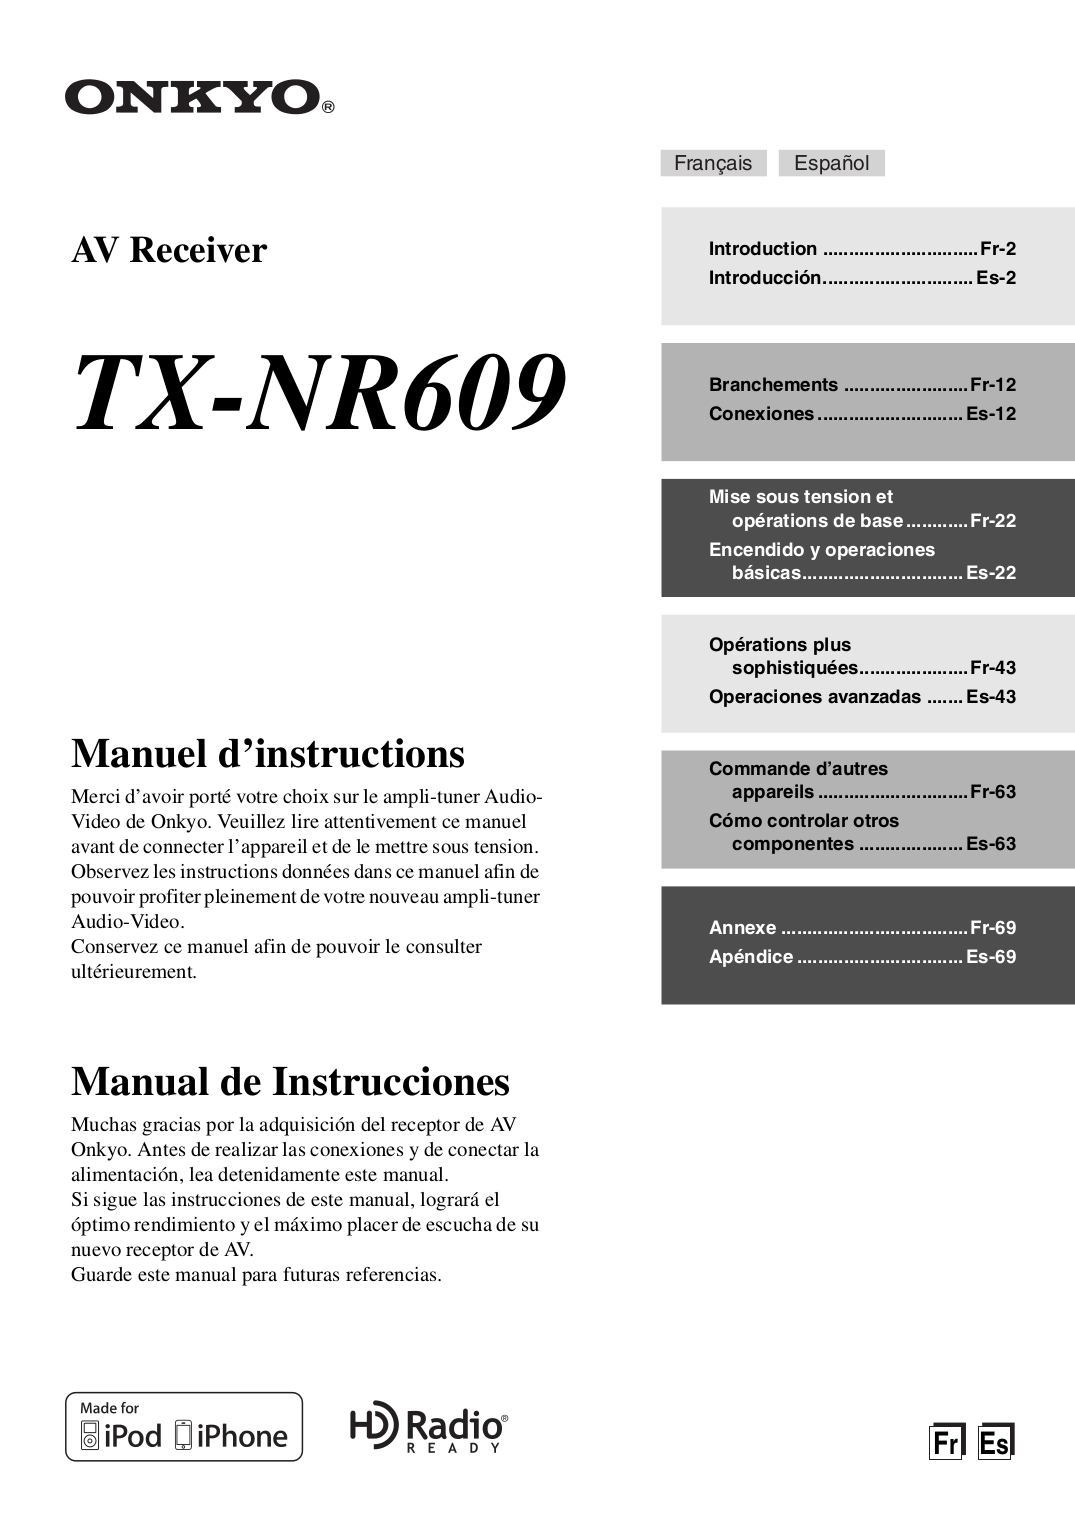 Download free pdf for onkyo tx-nr609 receiver manual